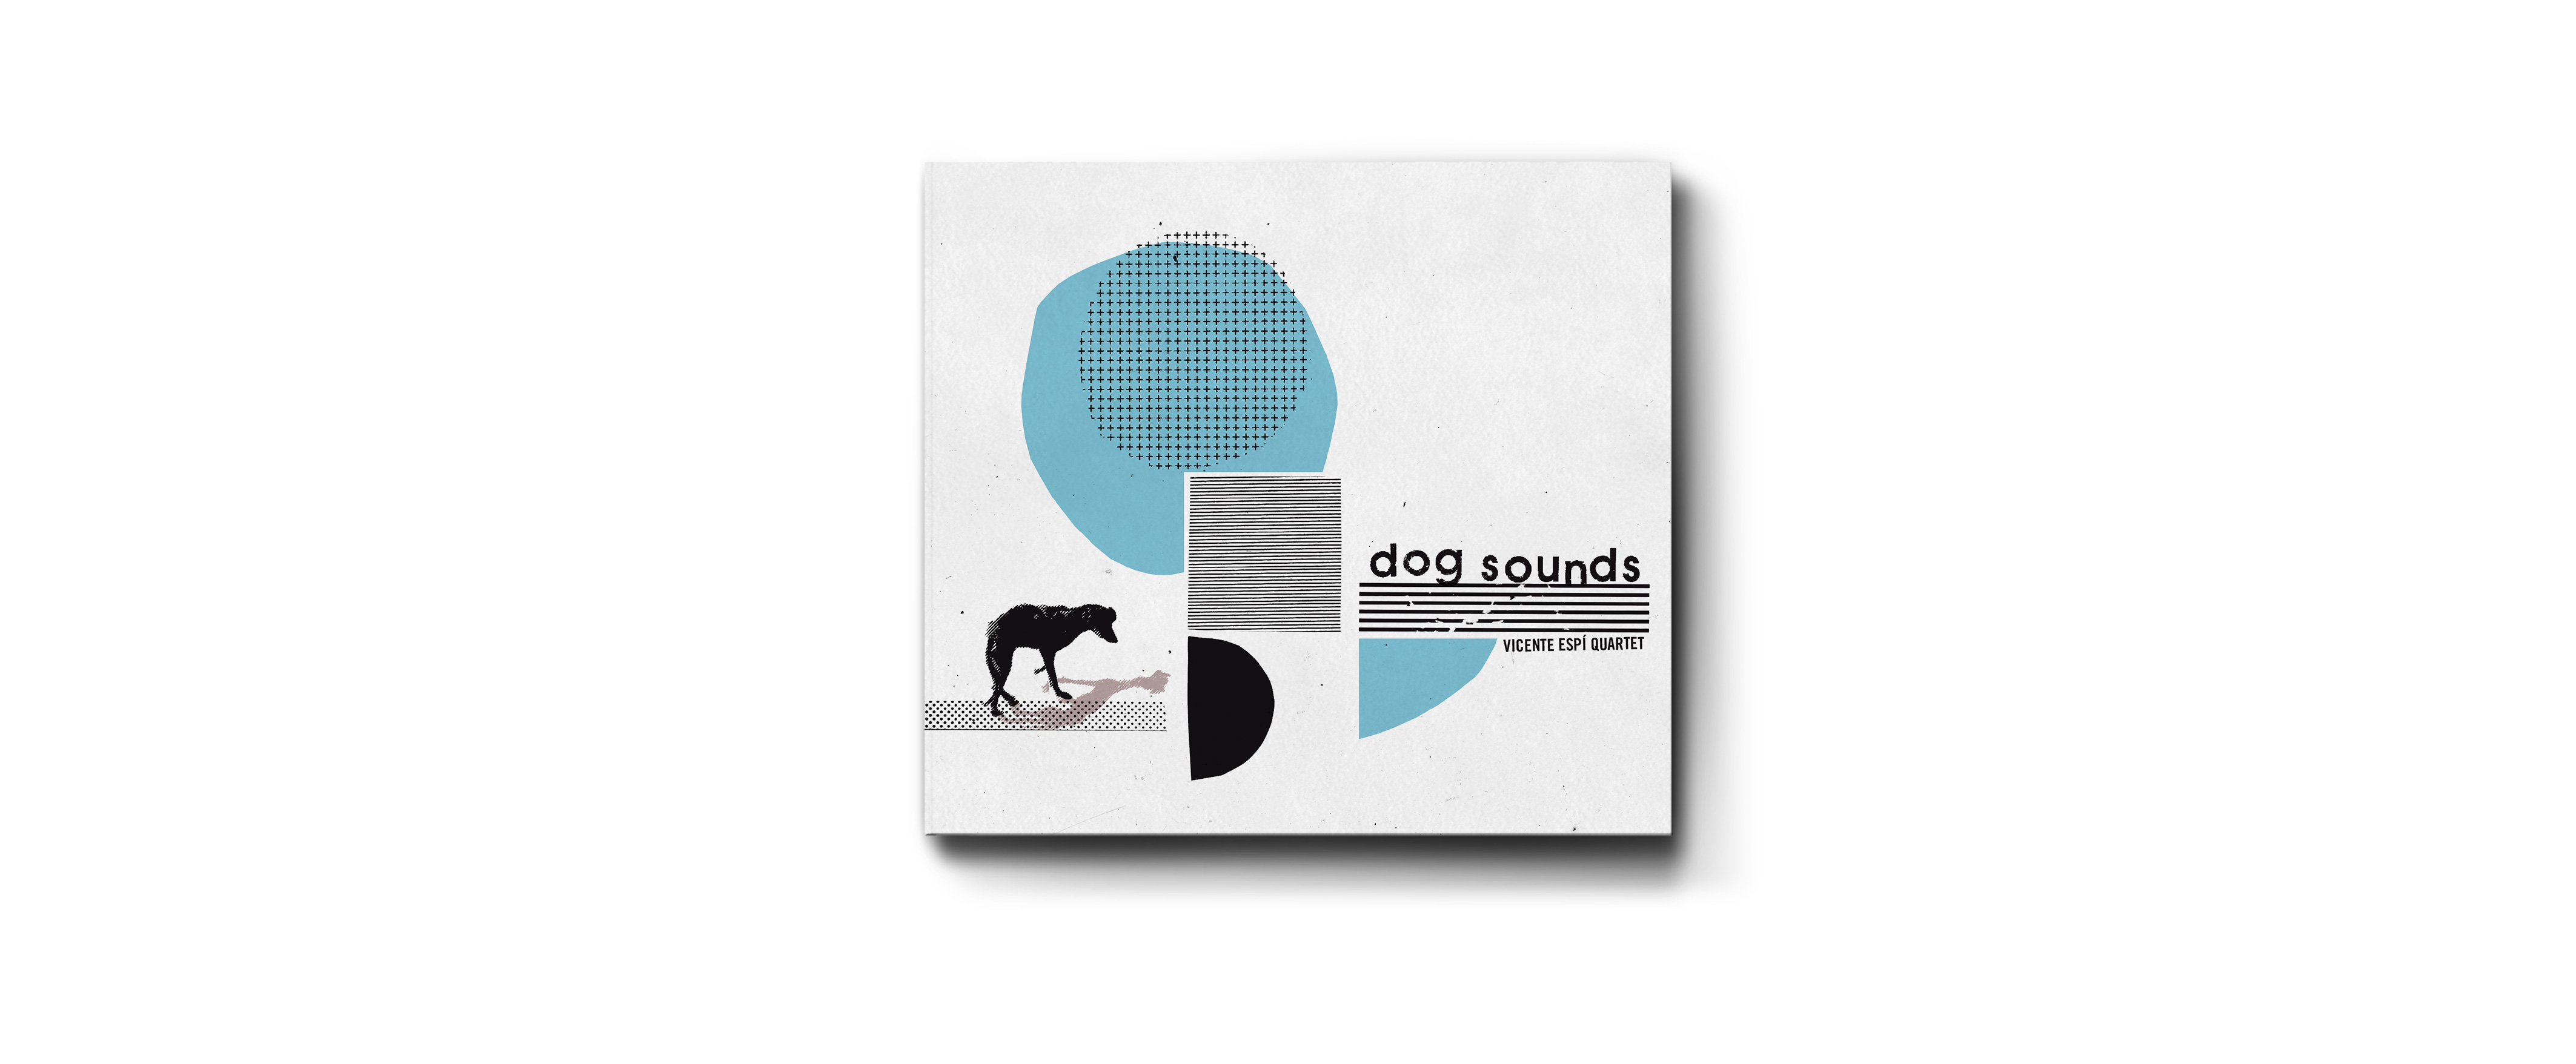 disco_dog_sounds_1.jpg